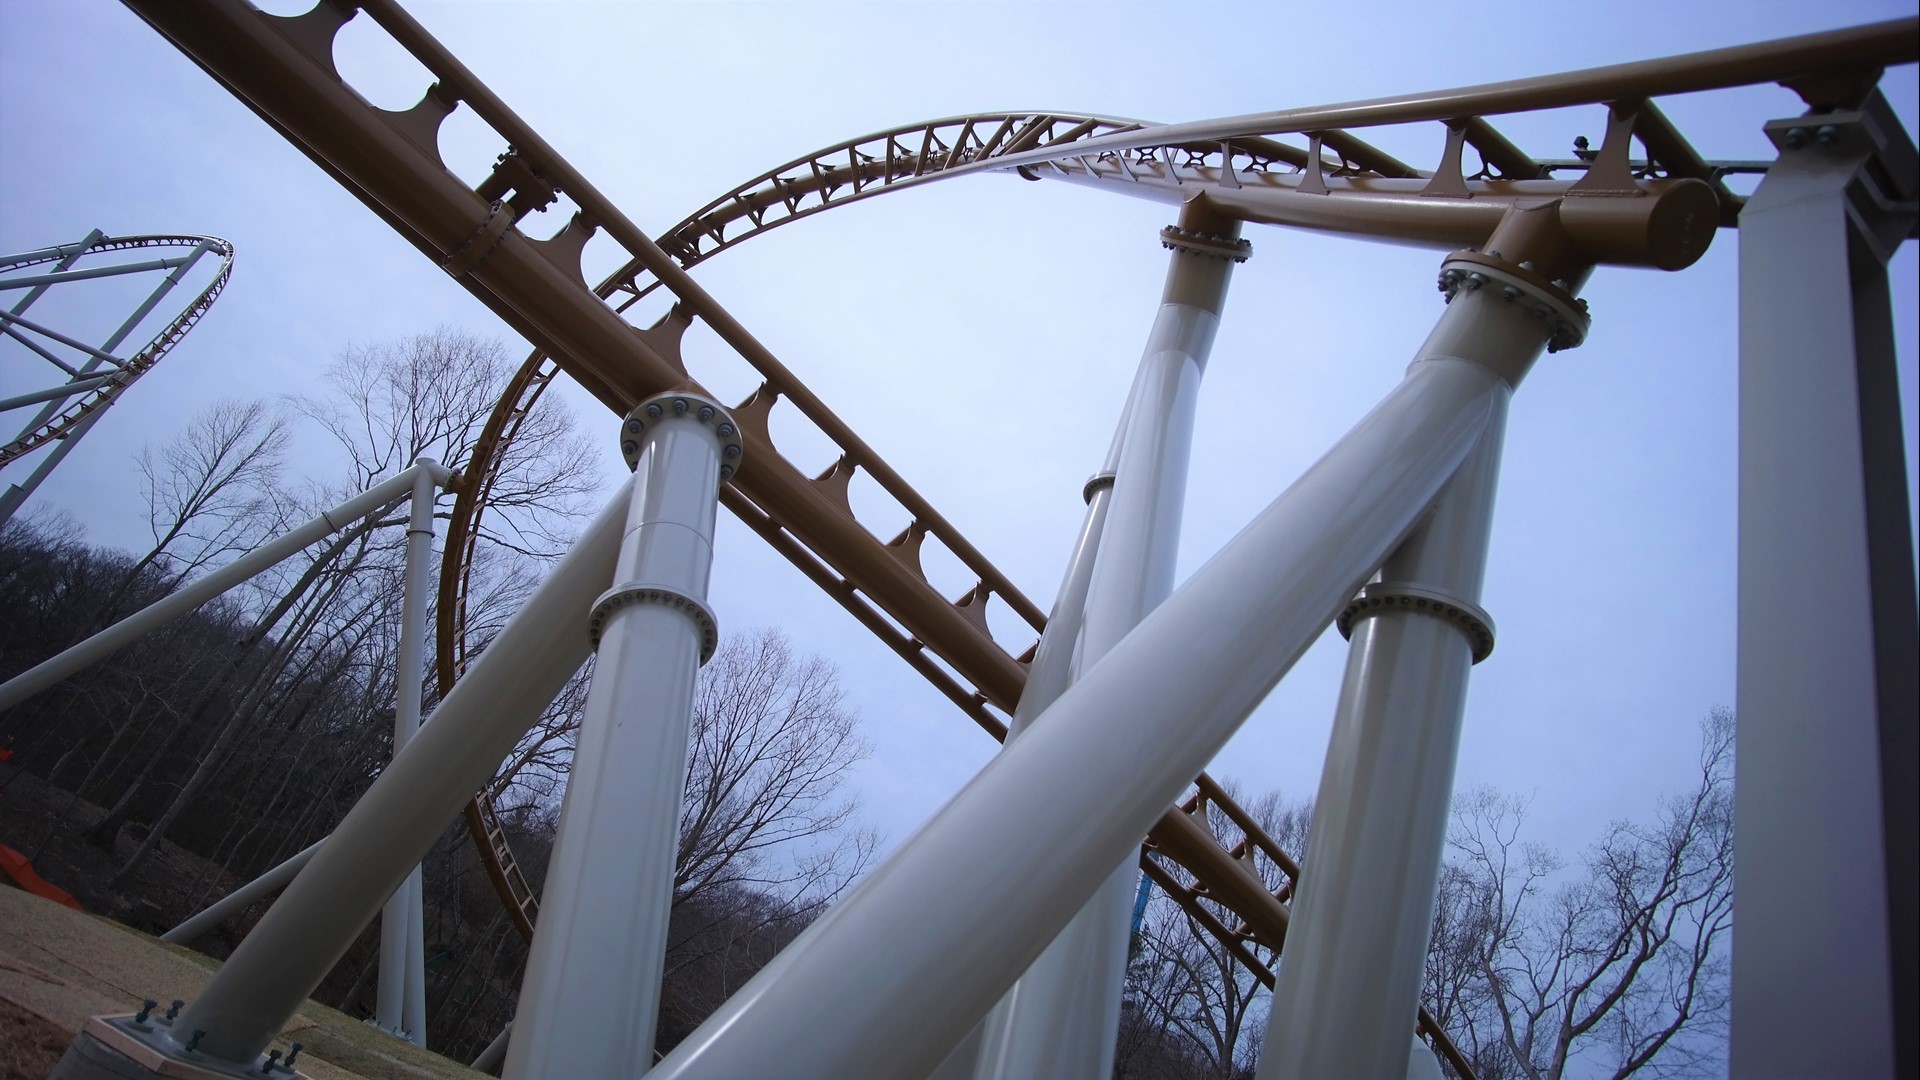 Pantheon roller coaster update from Busch Gardens ...